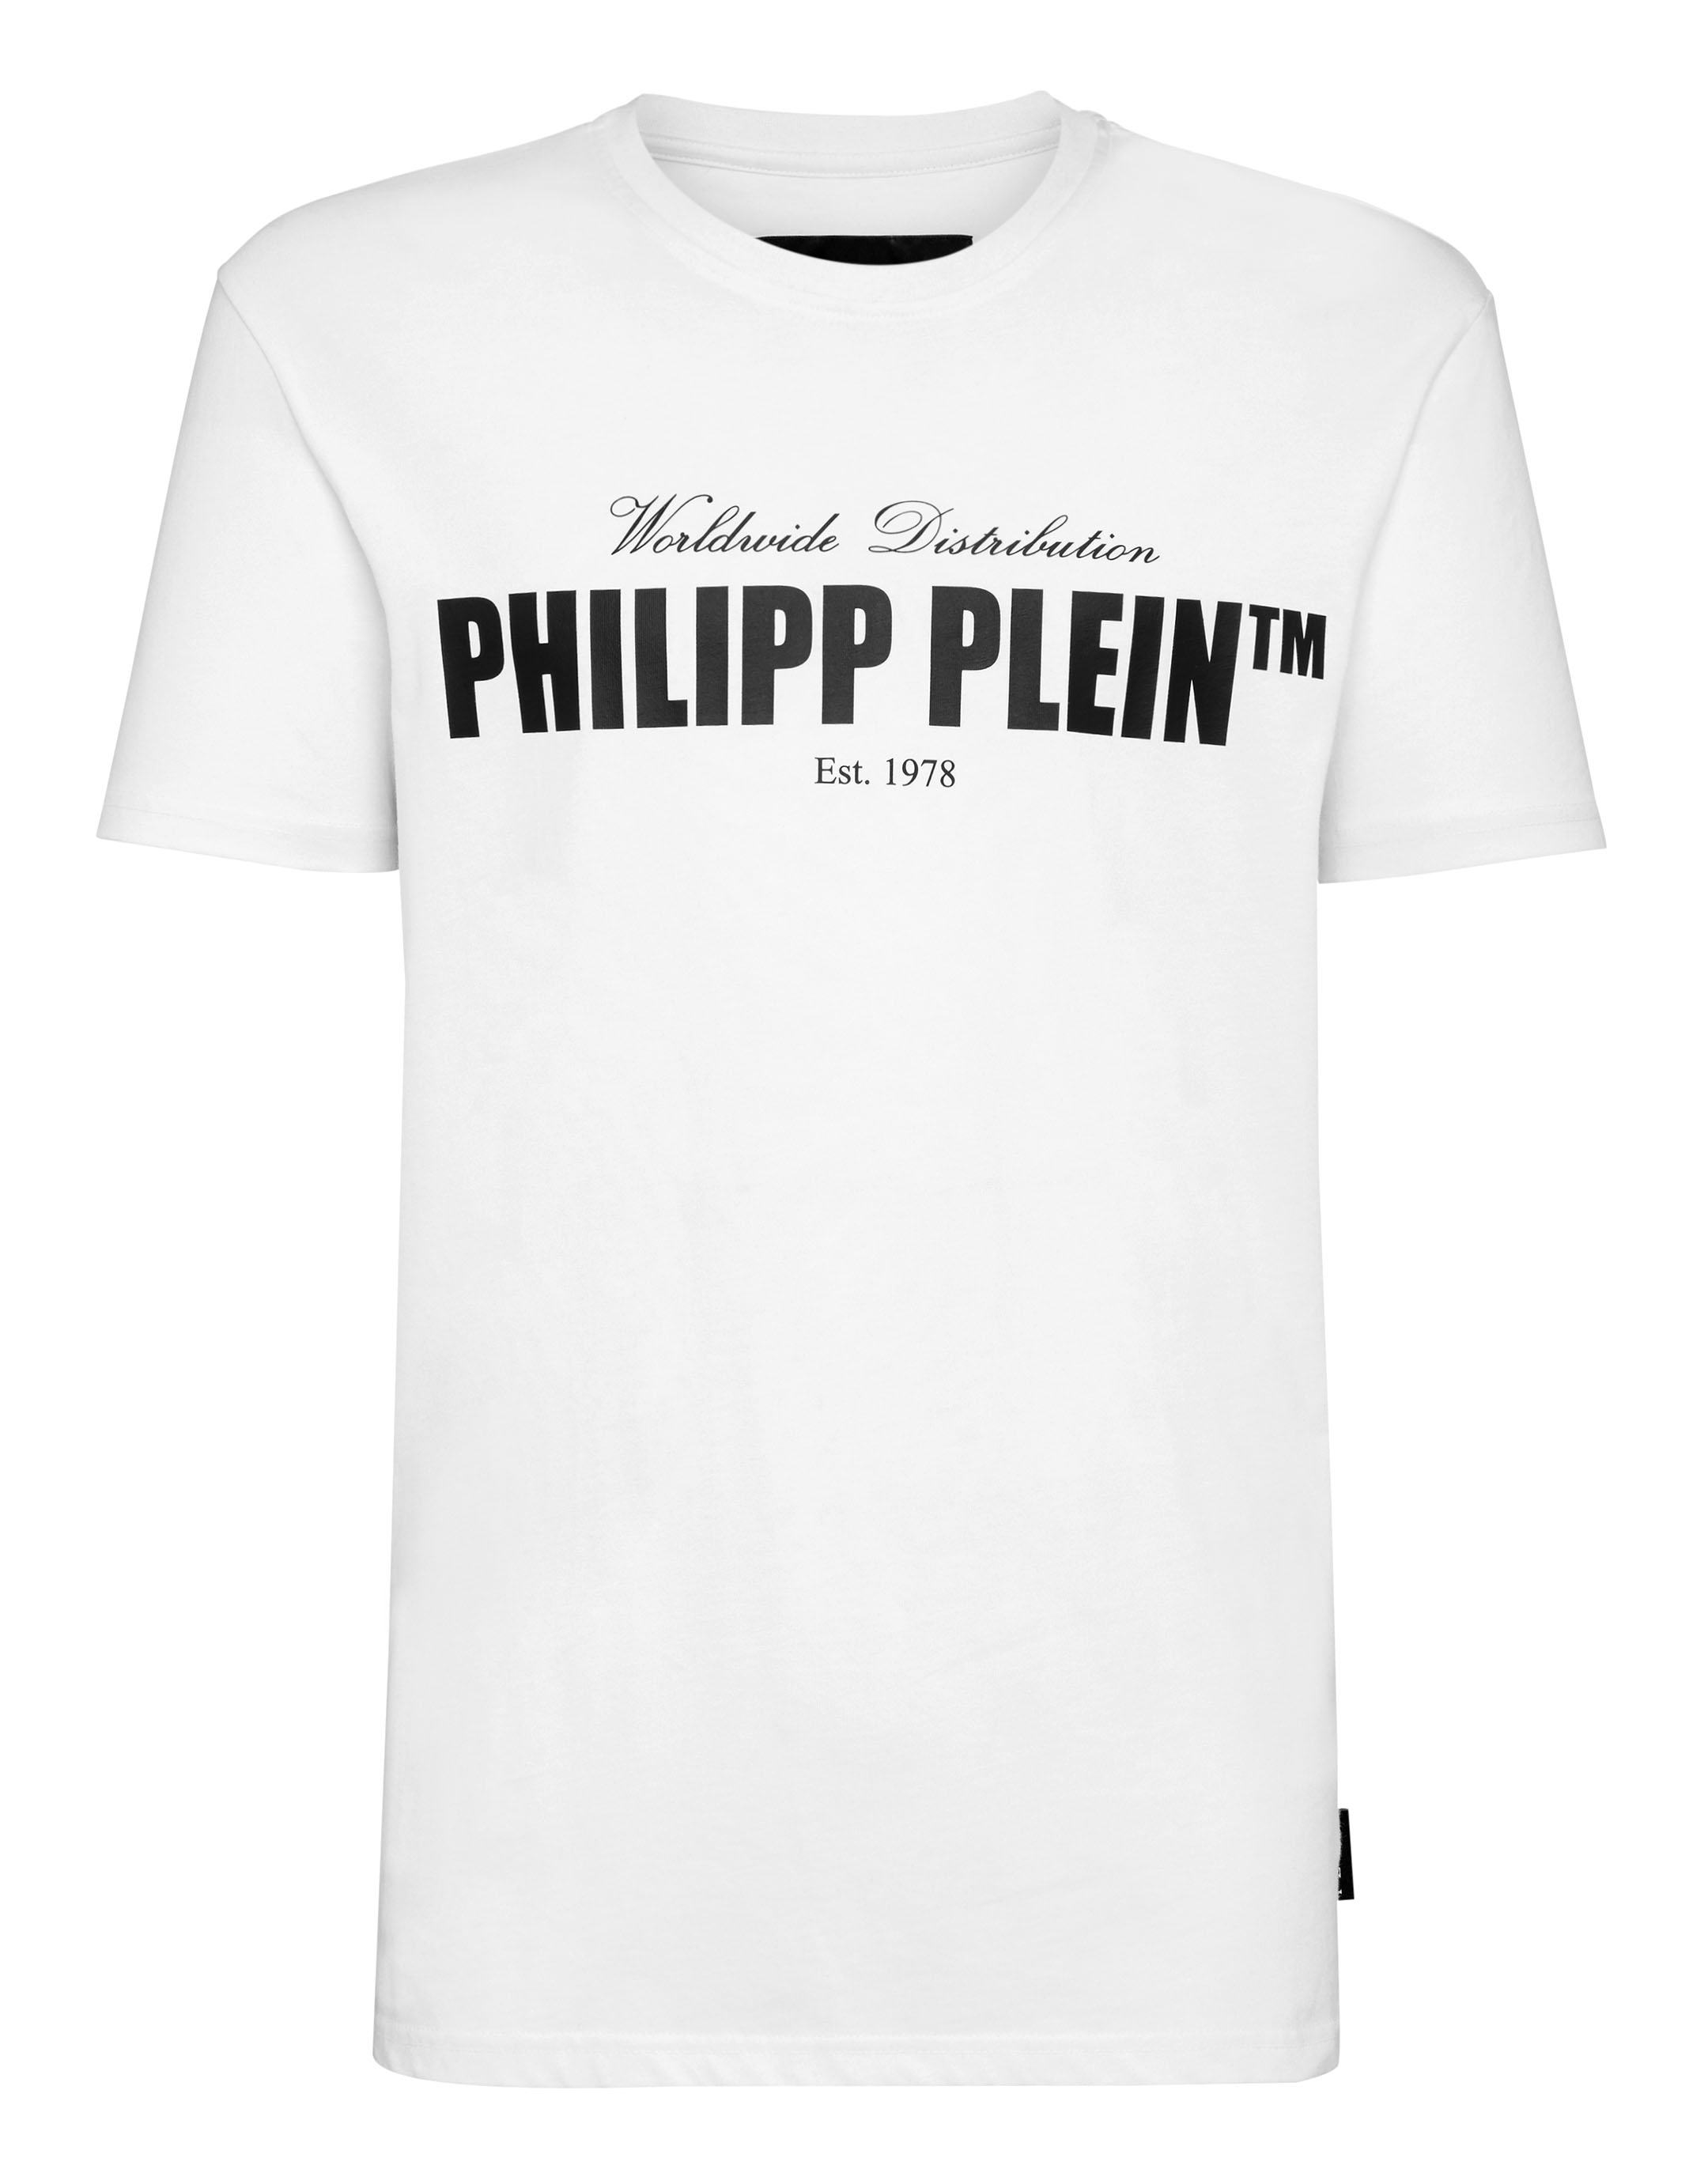 philipp plein 1978 t shirt